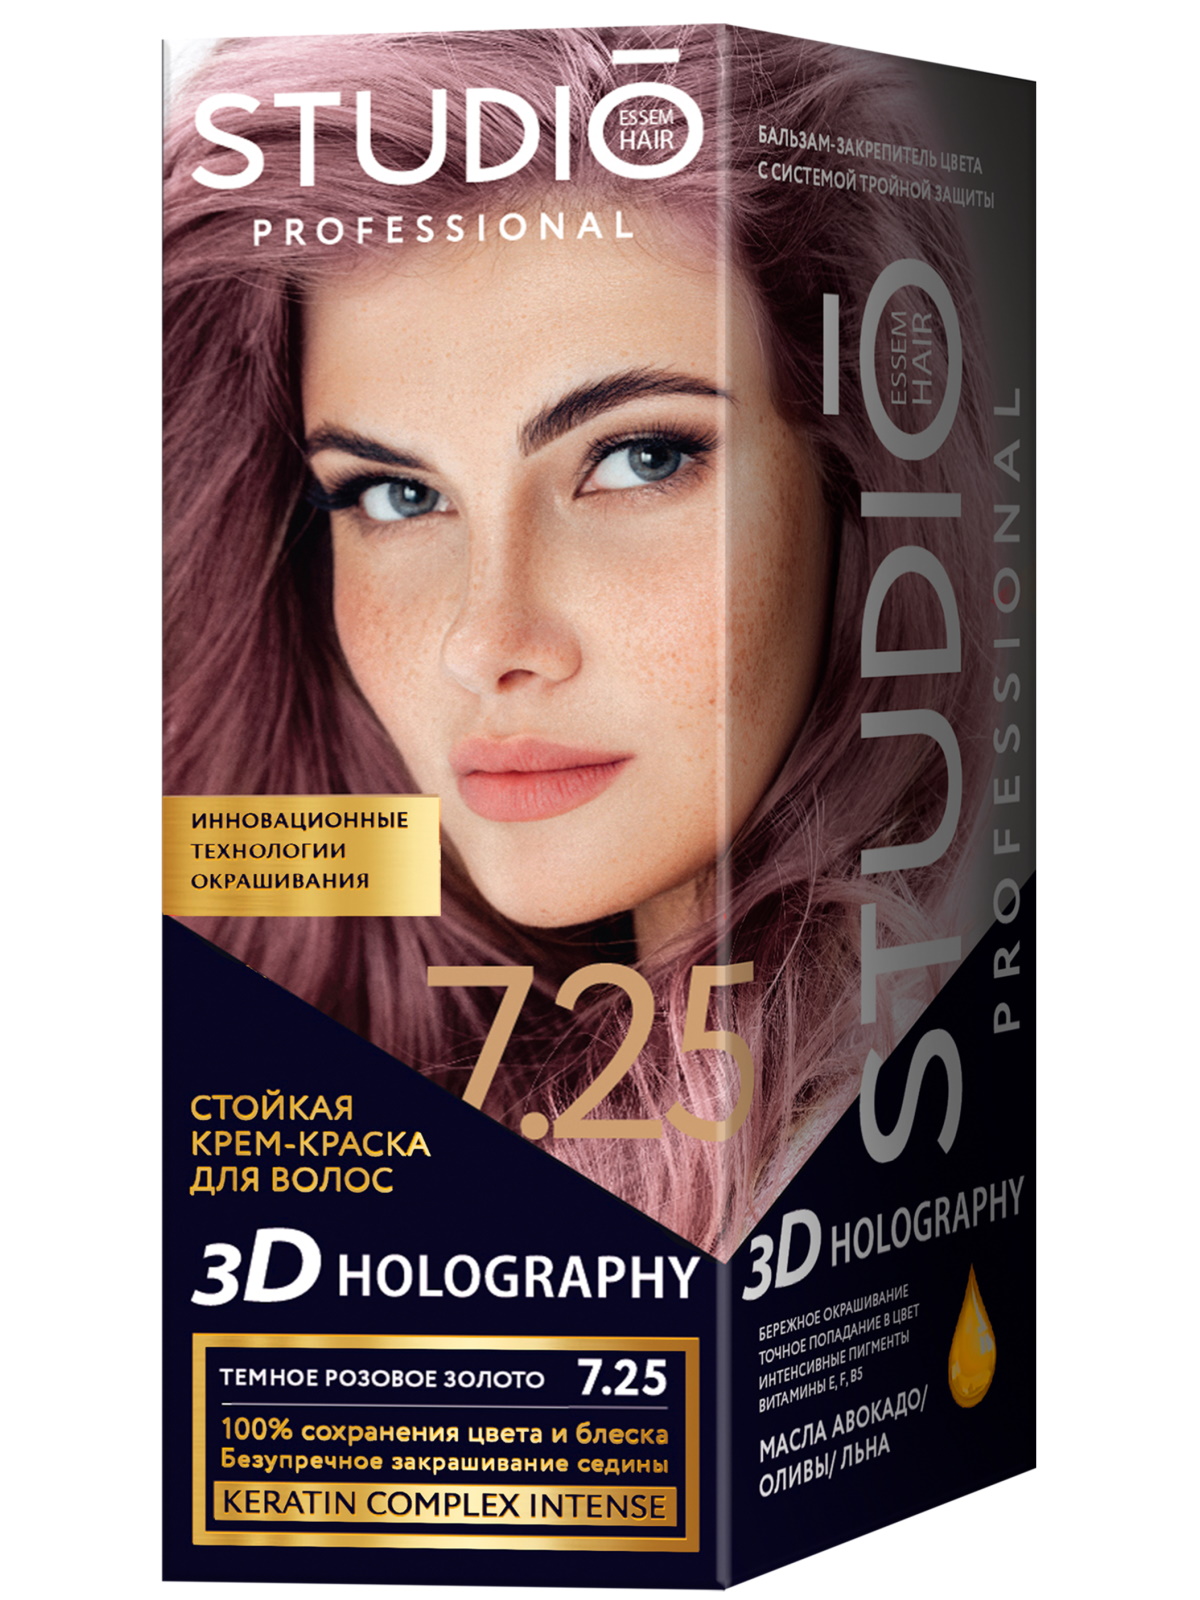 Комплект 3D HOLOGRAPHY STUDIO PROFESSIONAL 7.25 темное розовое золото 2*50+15 мл